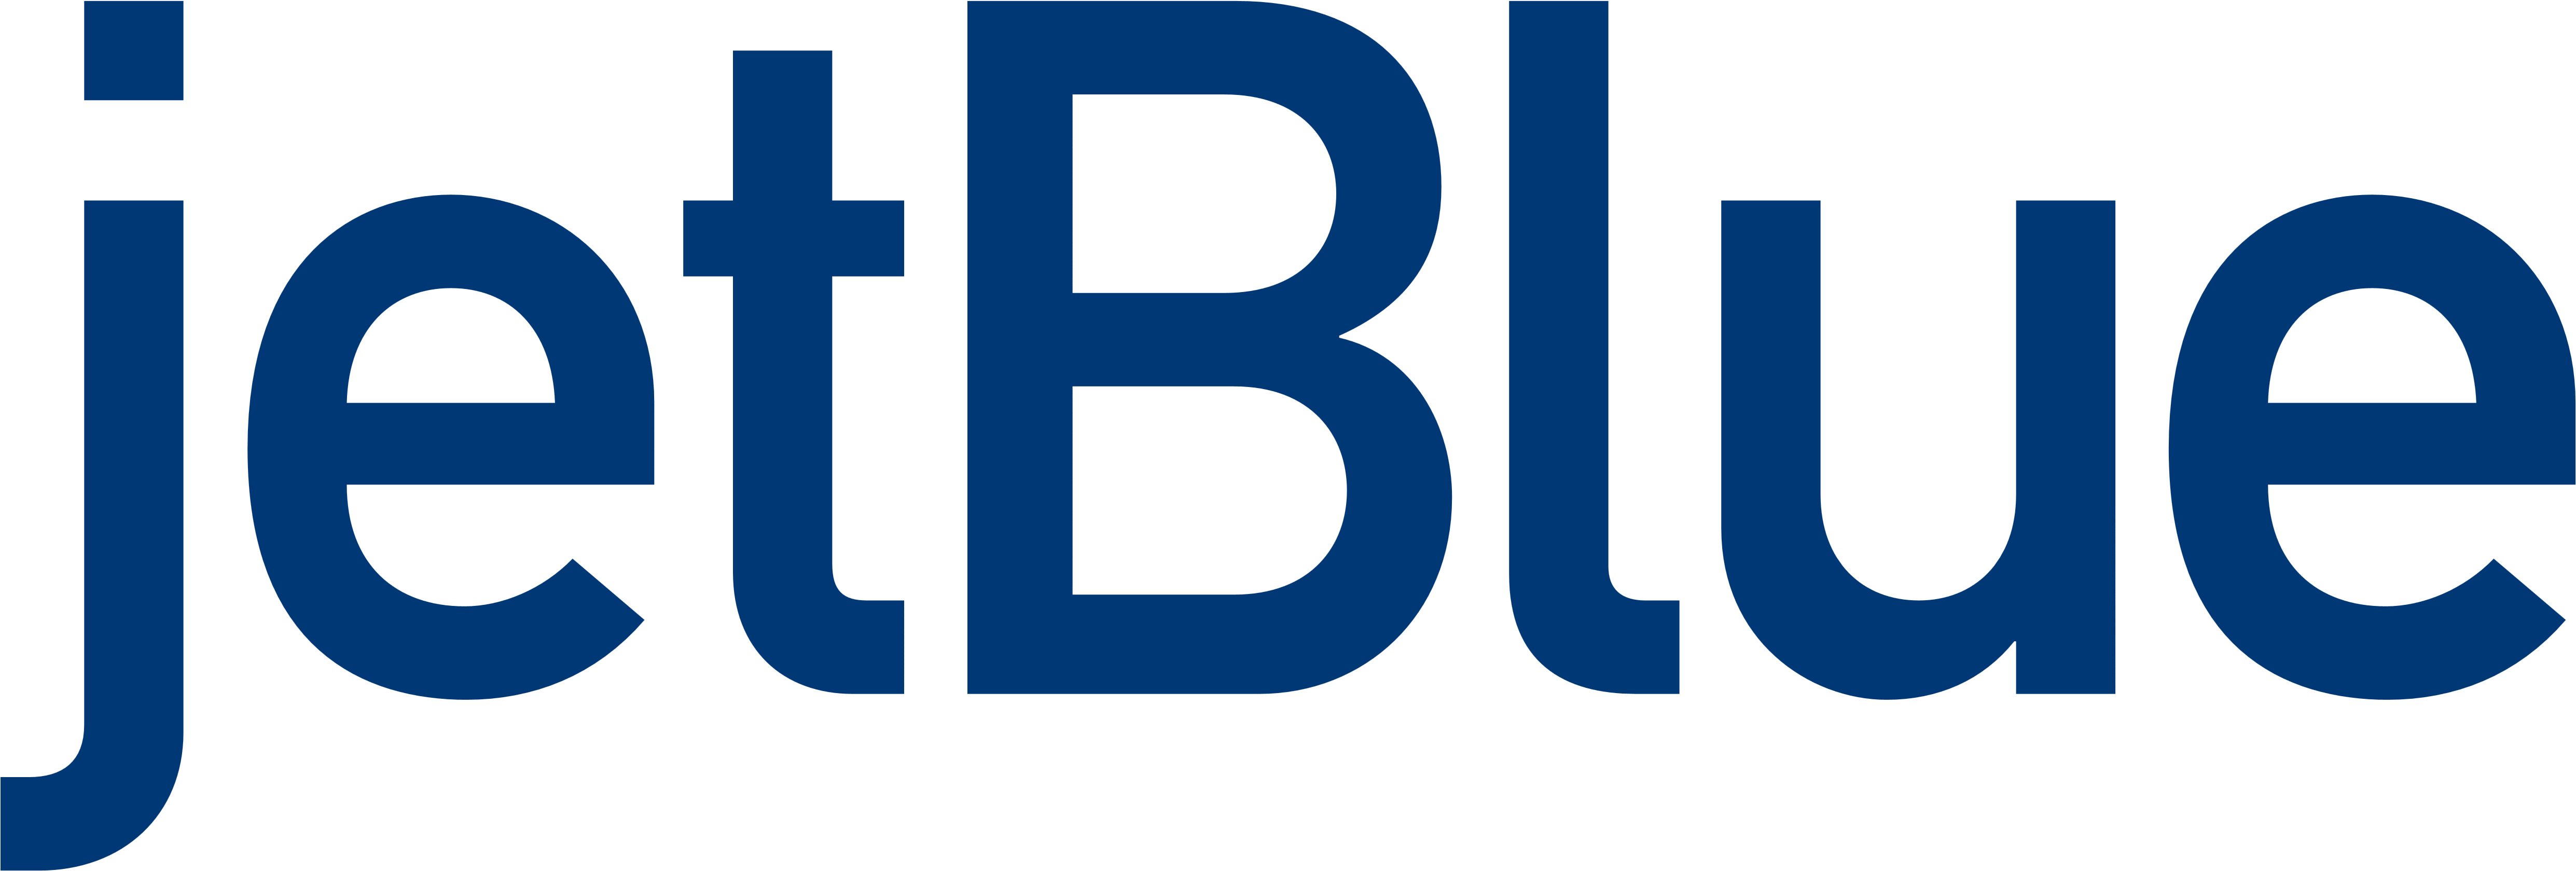 Jetblue Logo - Jet Blue (5000x1678)